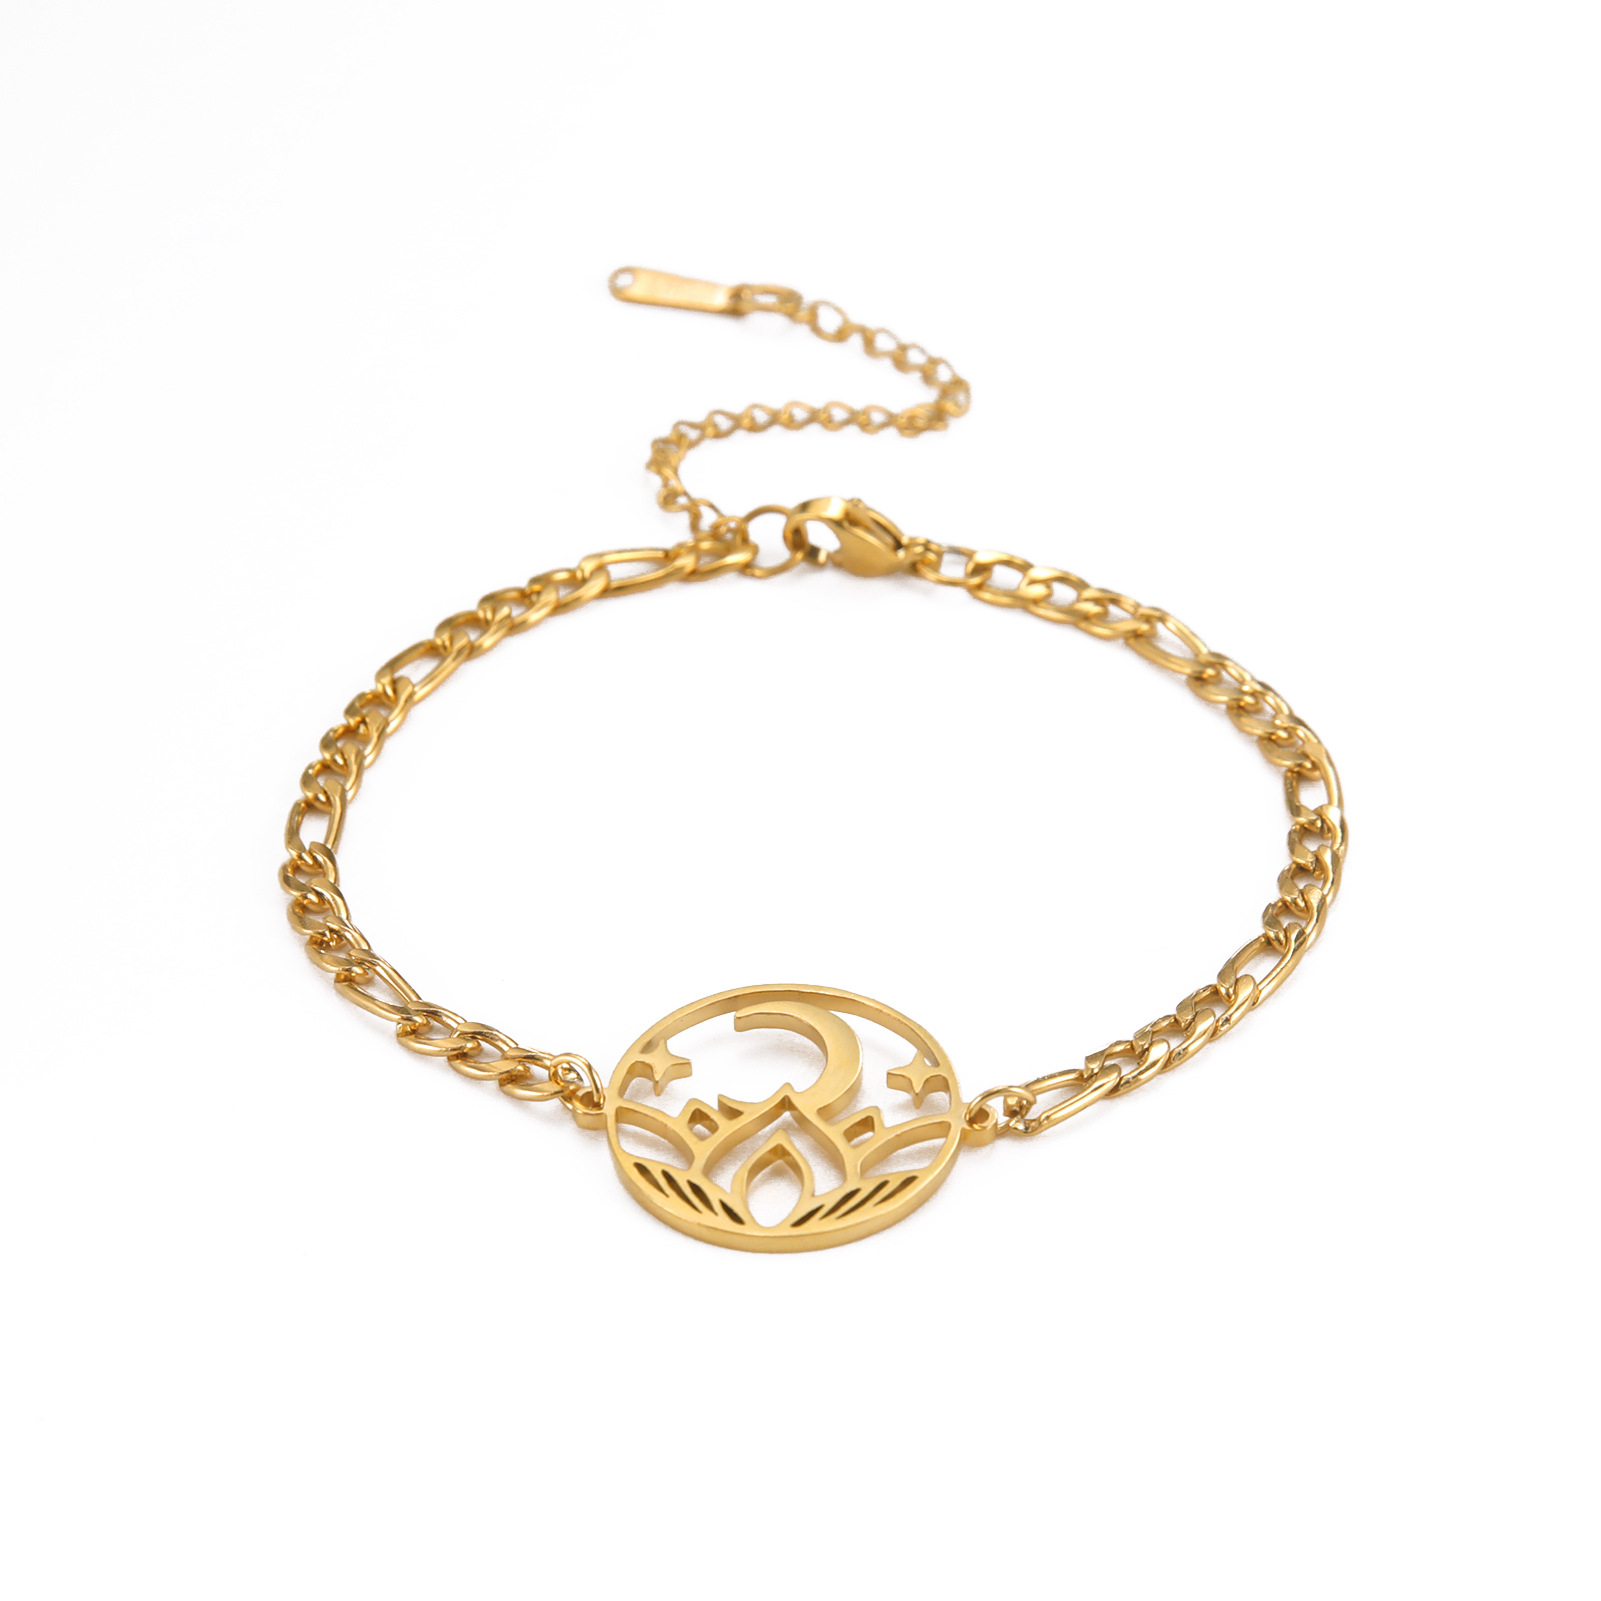 Gold-figaro chain